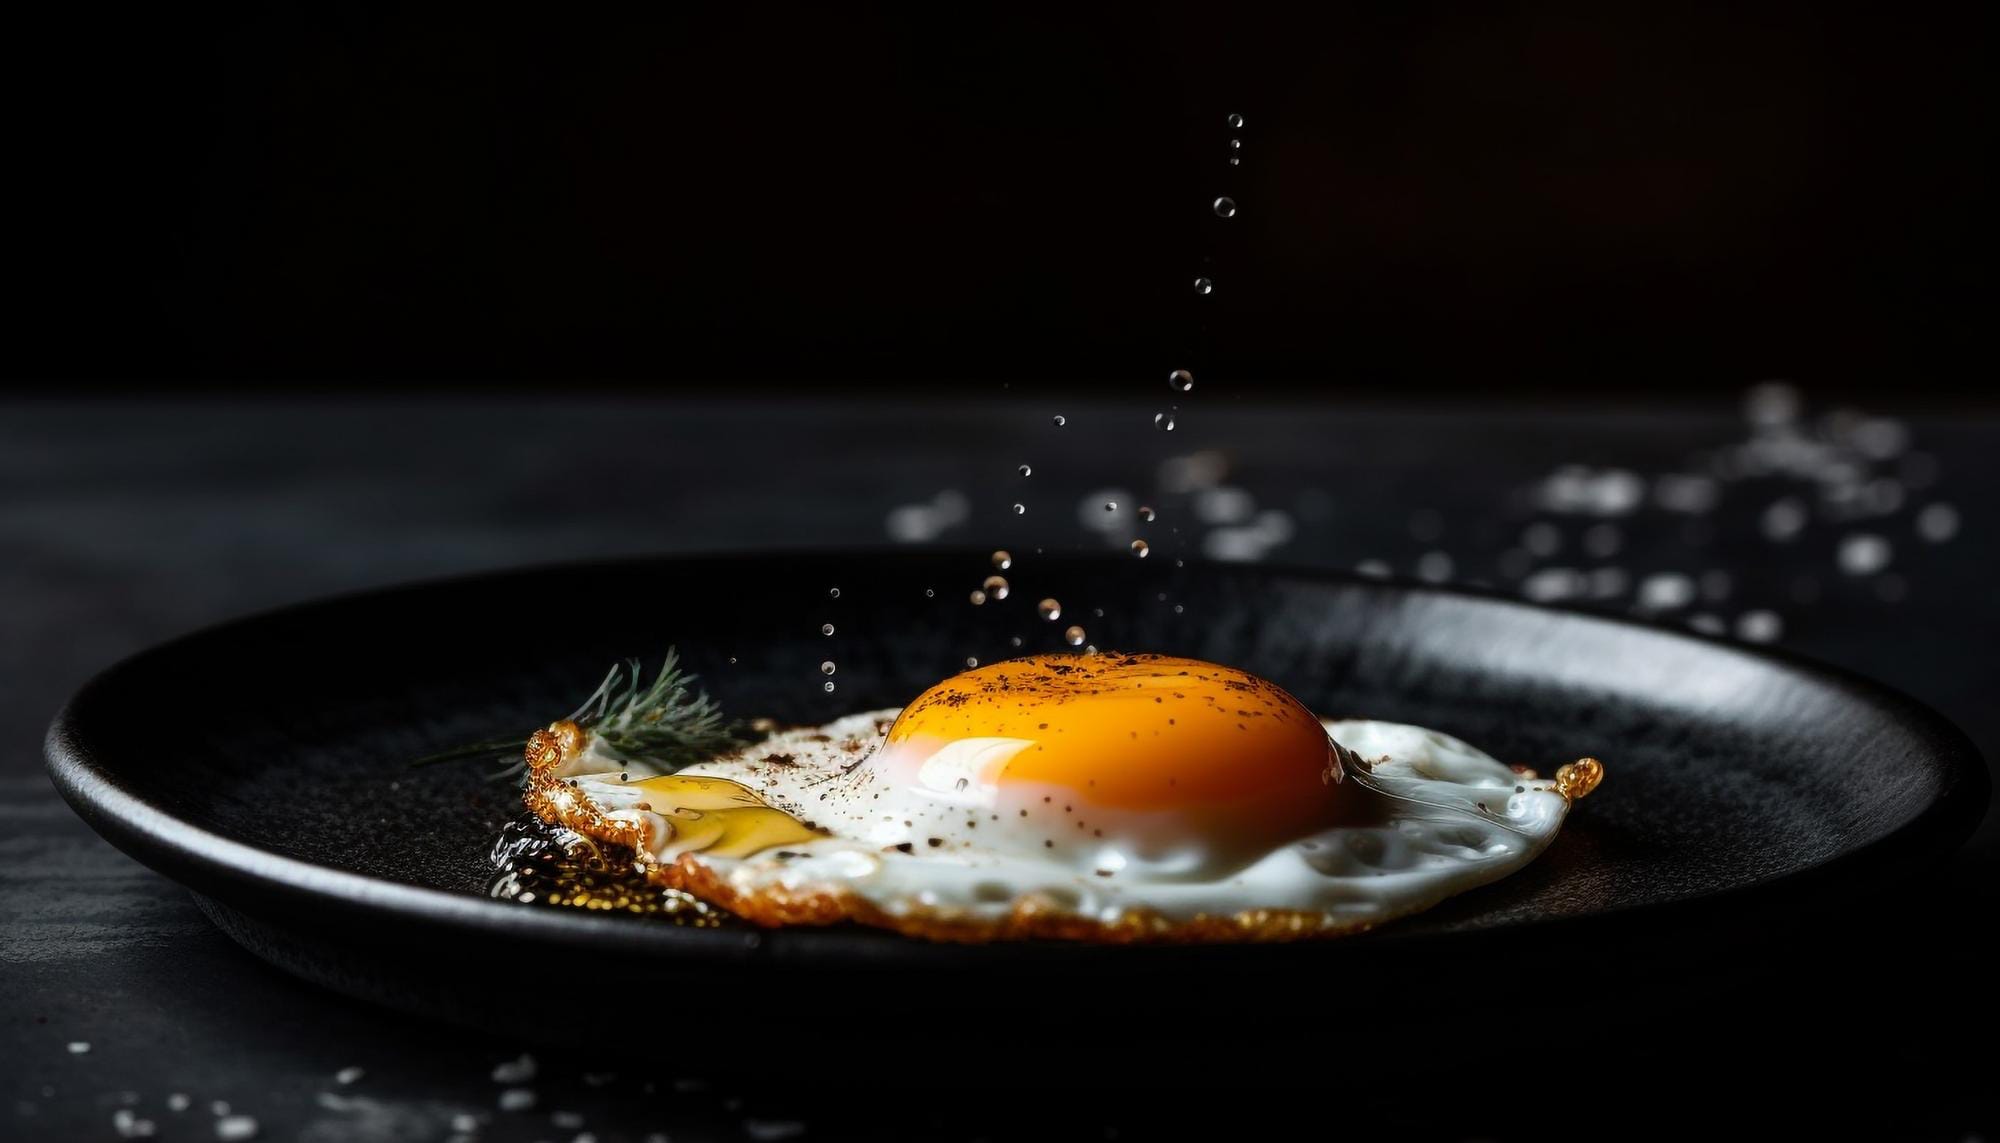 Porqué deberías comer huevos, y porqué debería ser tu cena ideal para adelgazar